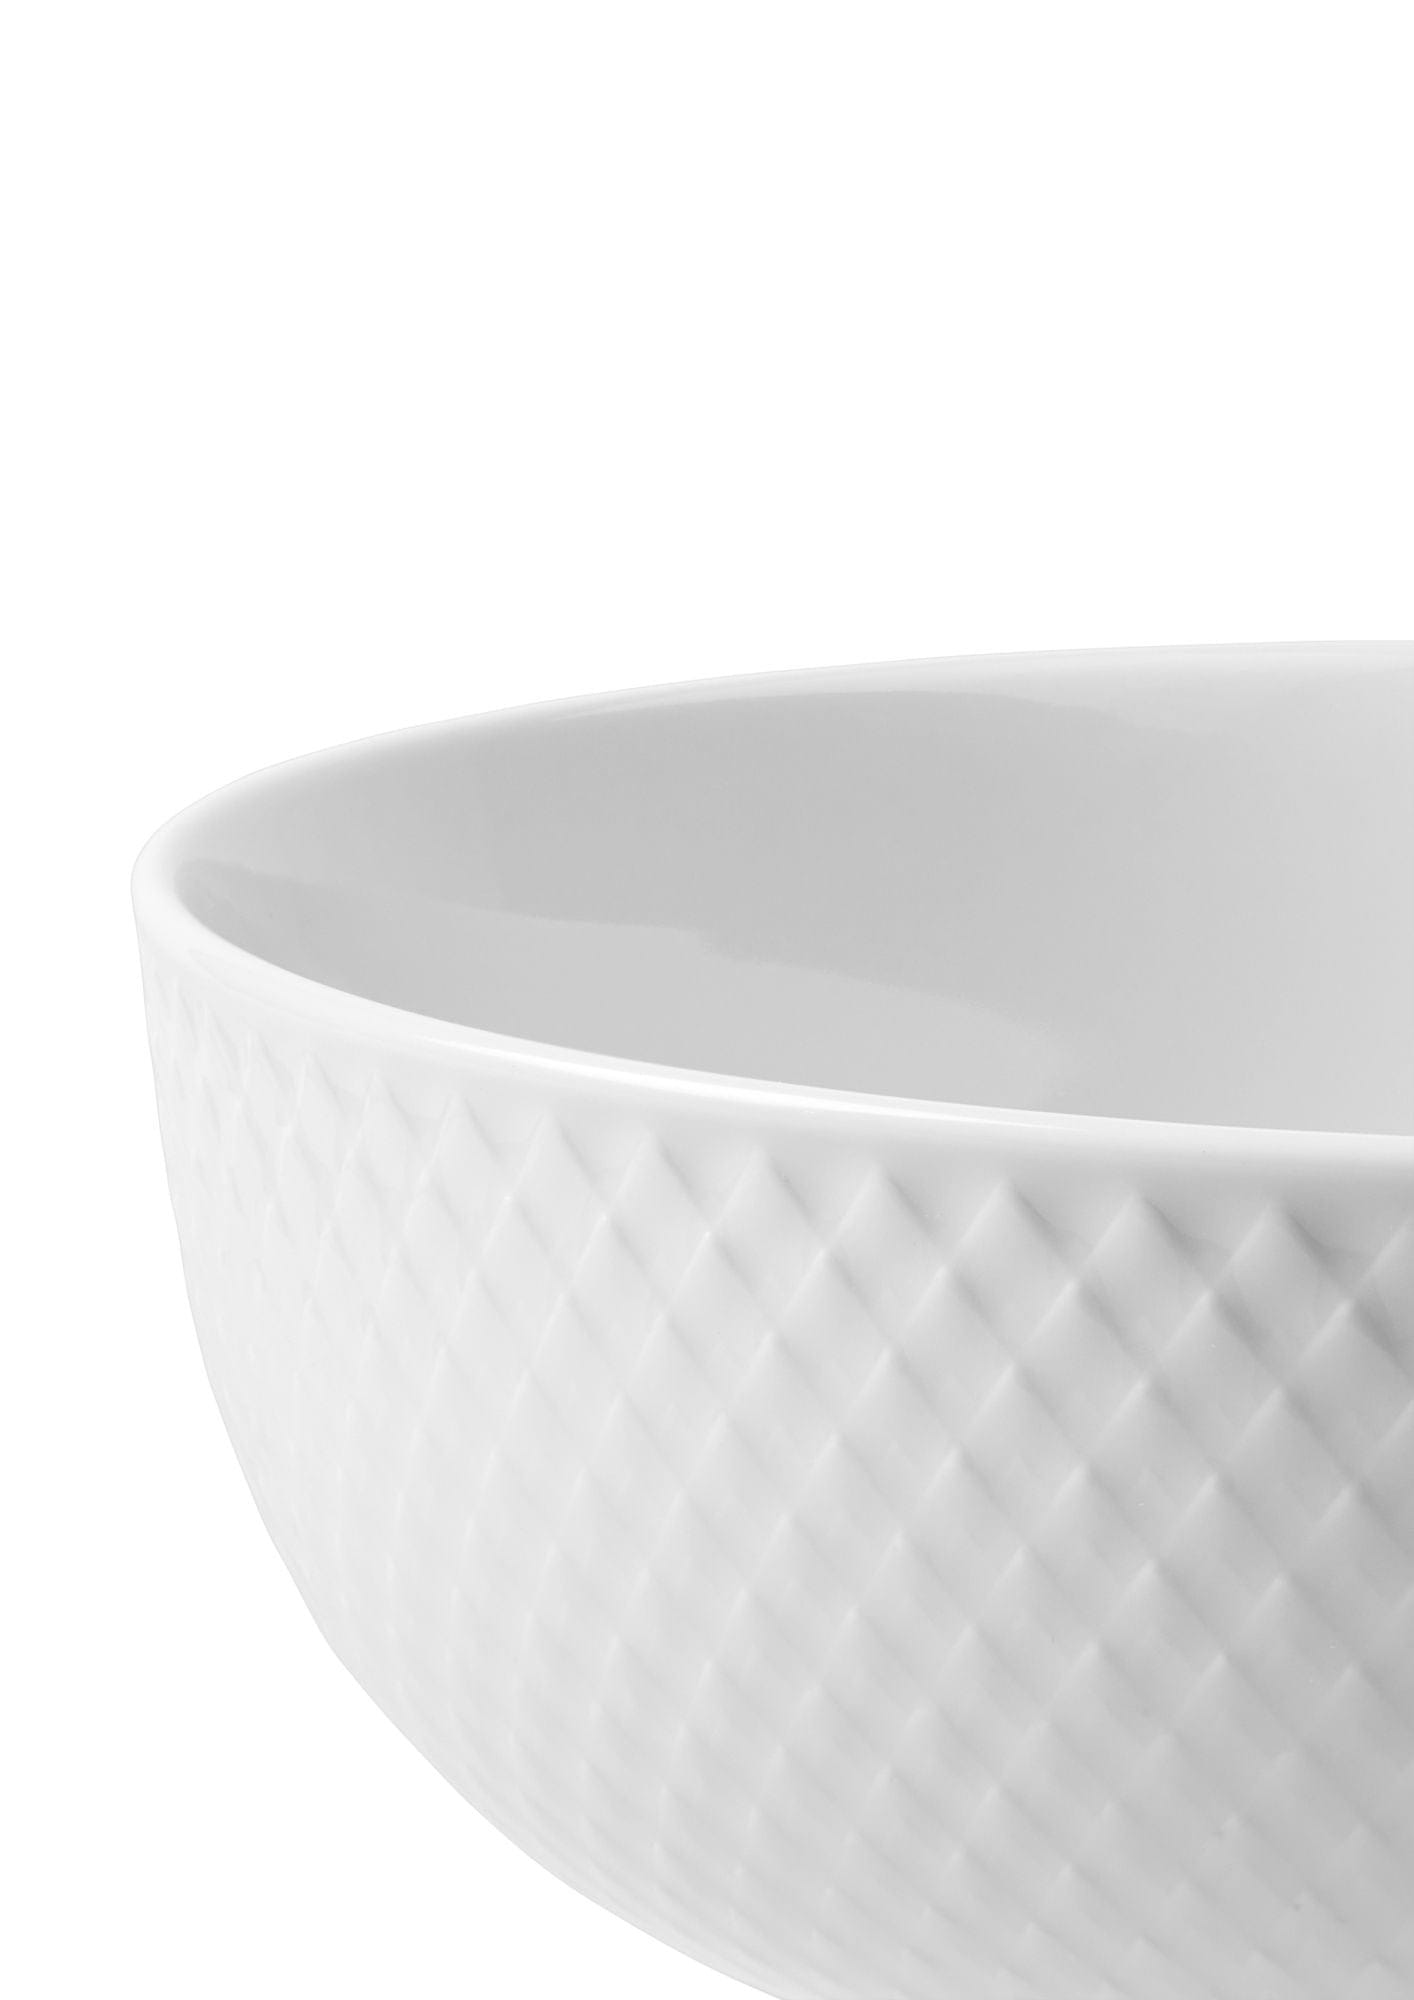 Lyngby Porcelæn Rhombe Bowl Ø15,5 cm, vit